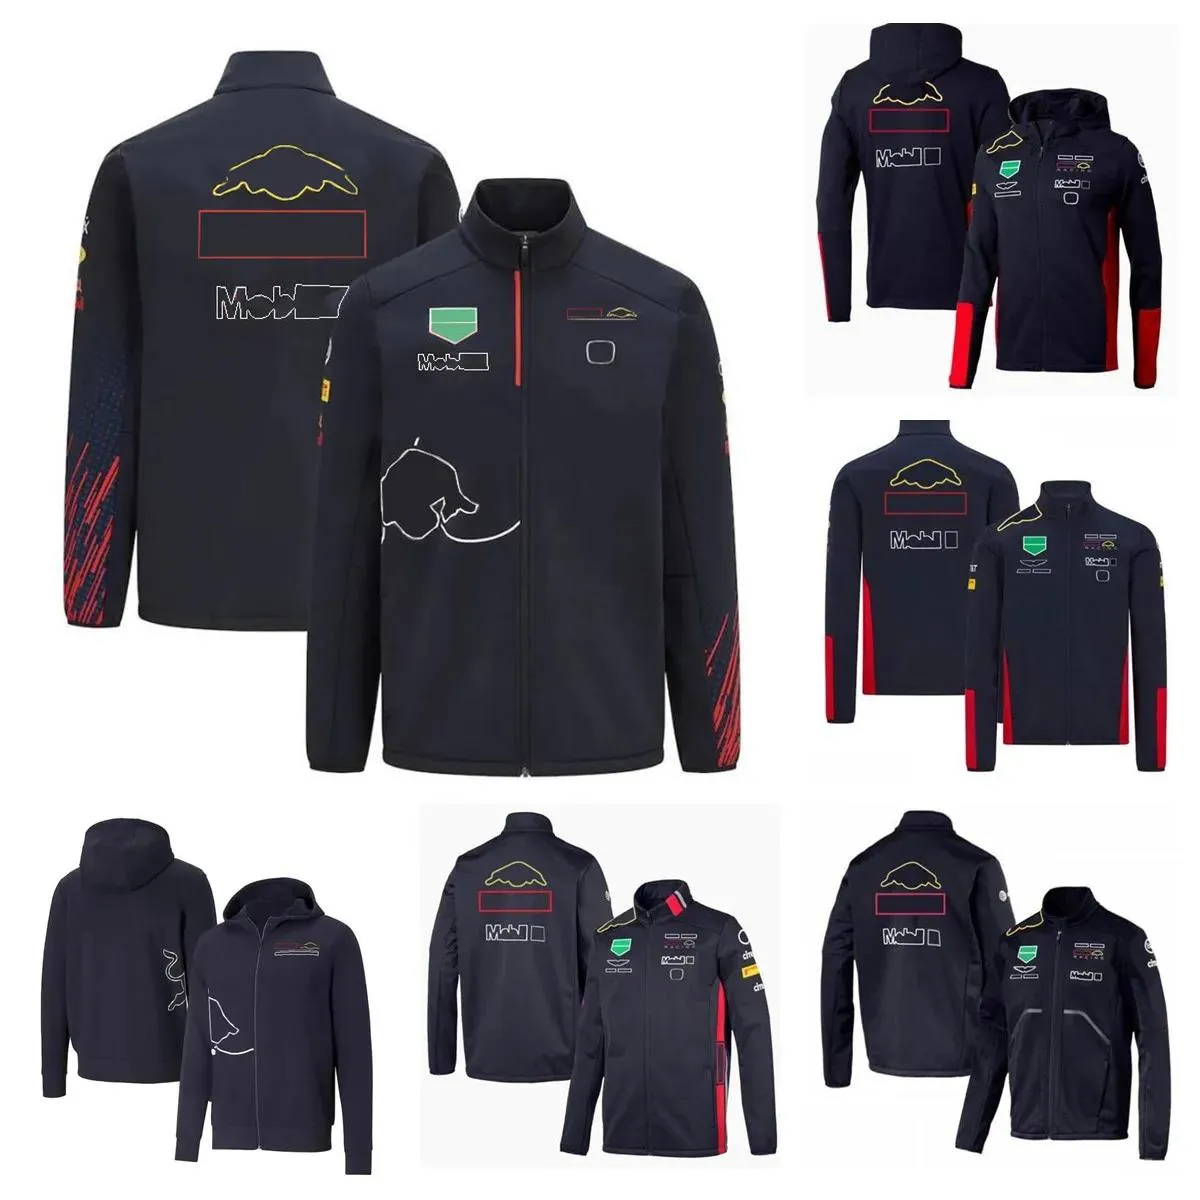 Apparel F1 Formula 1 racing jacket hoodie with the same custom